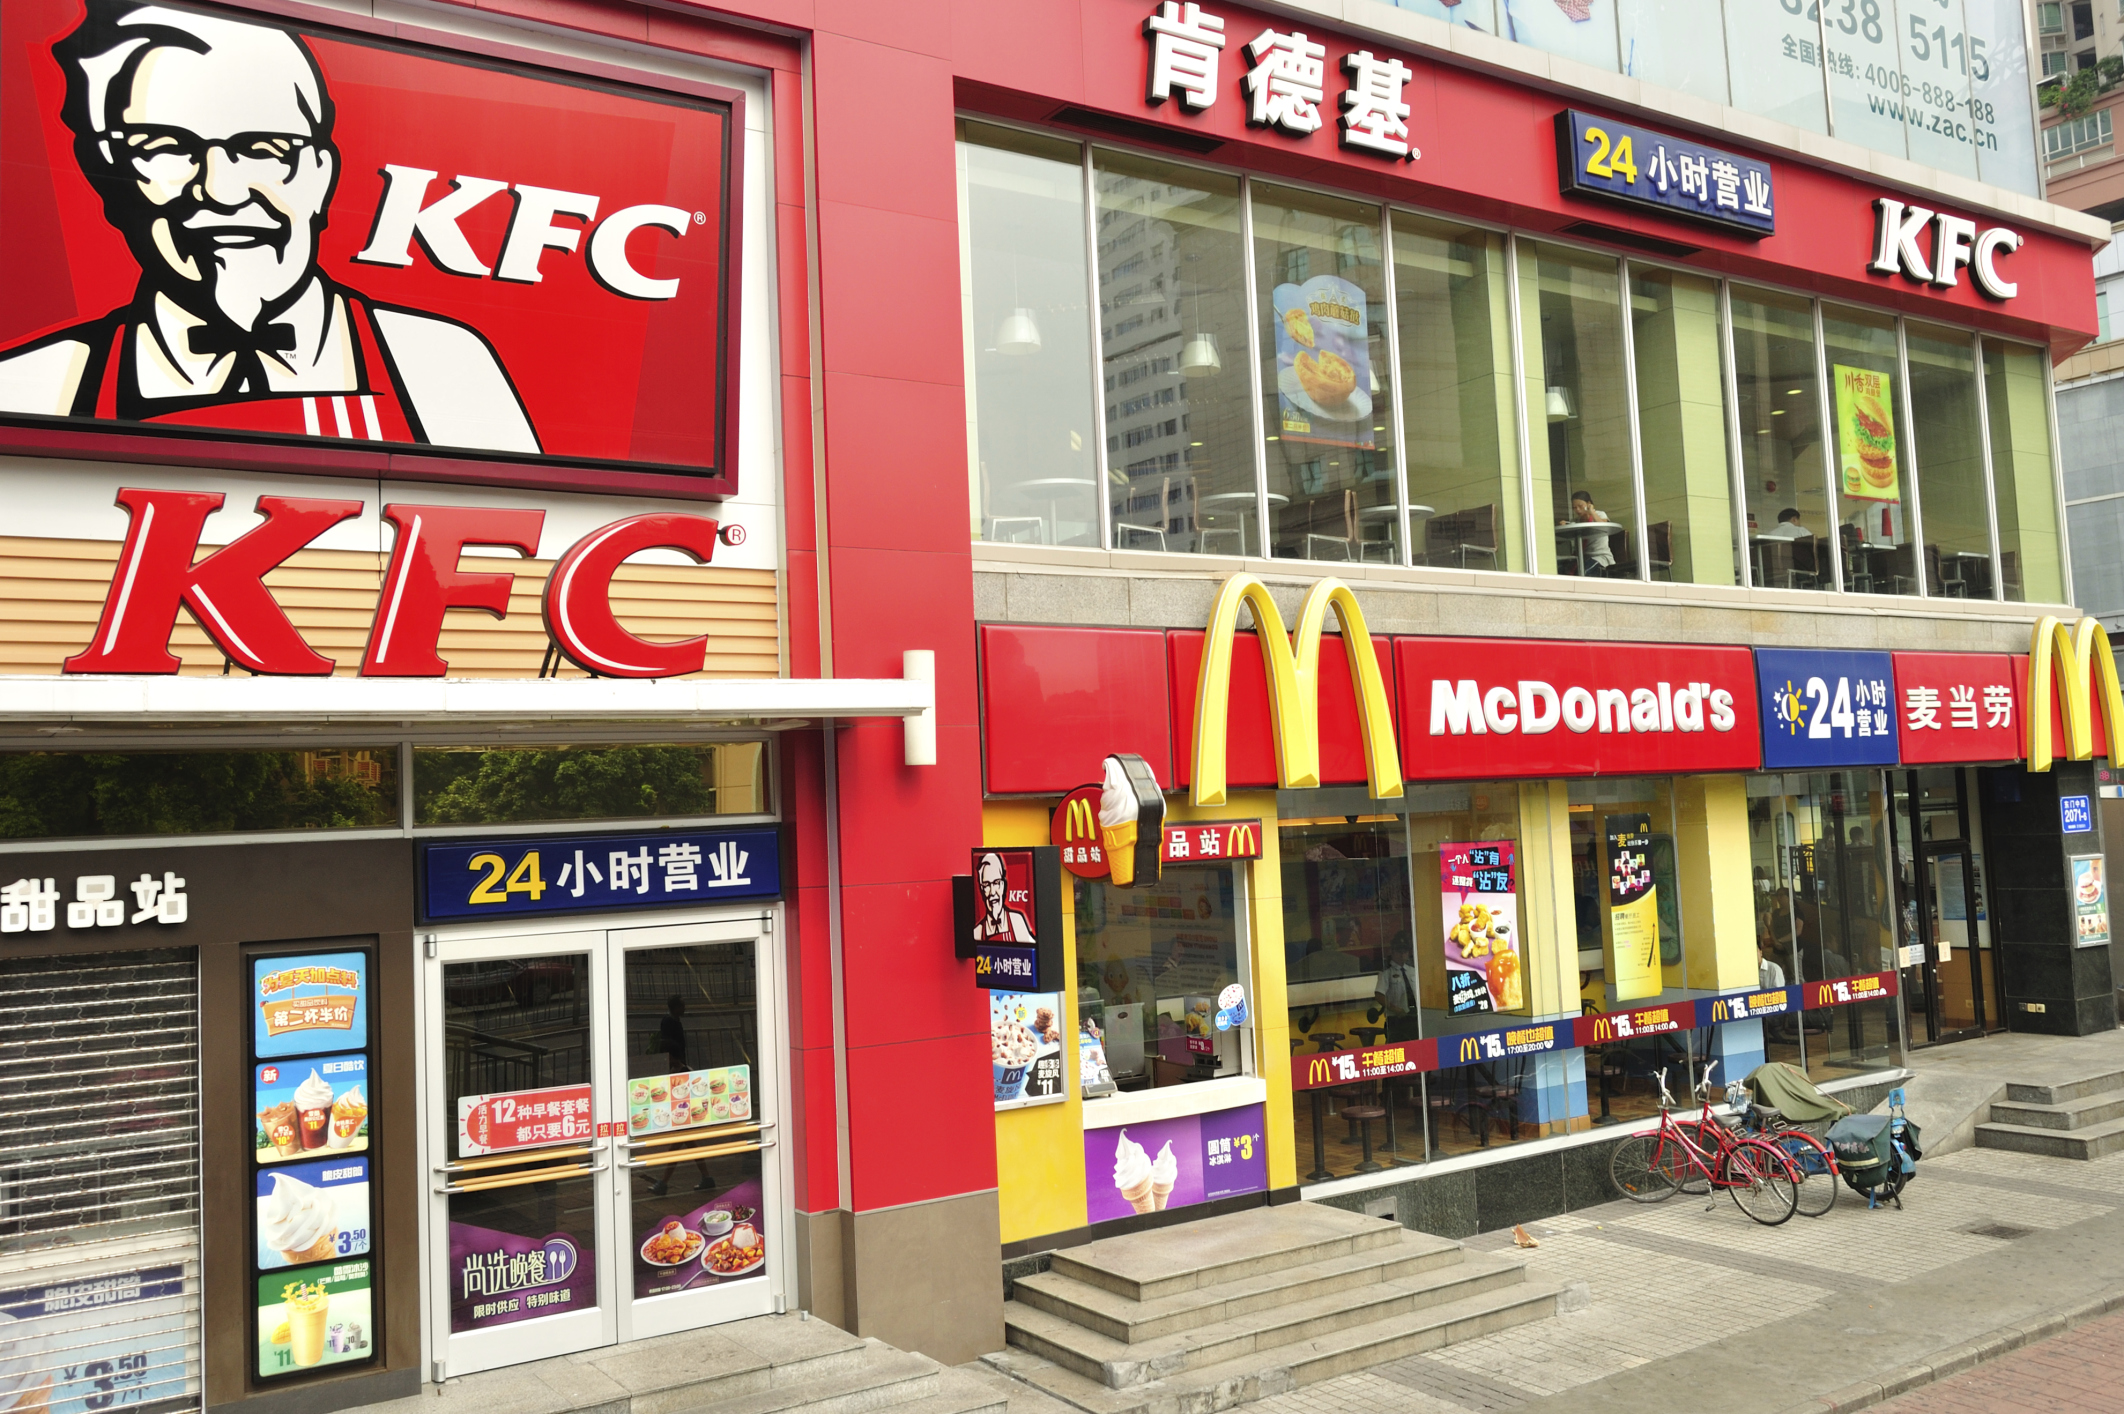 financialounge -  carne cina globalizzazione McDonald's Shanghai Husi Yum